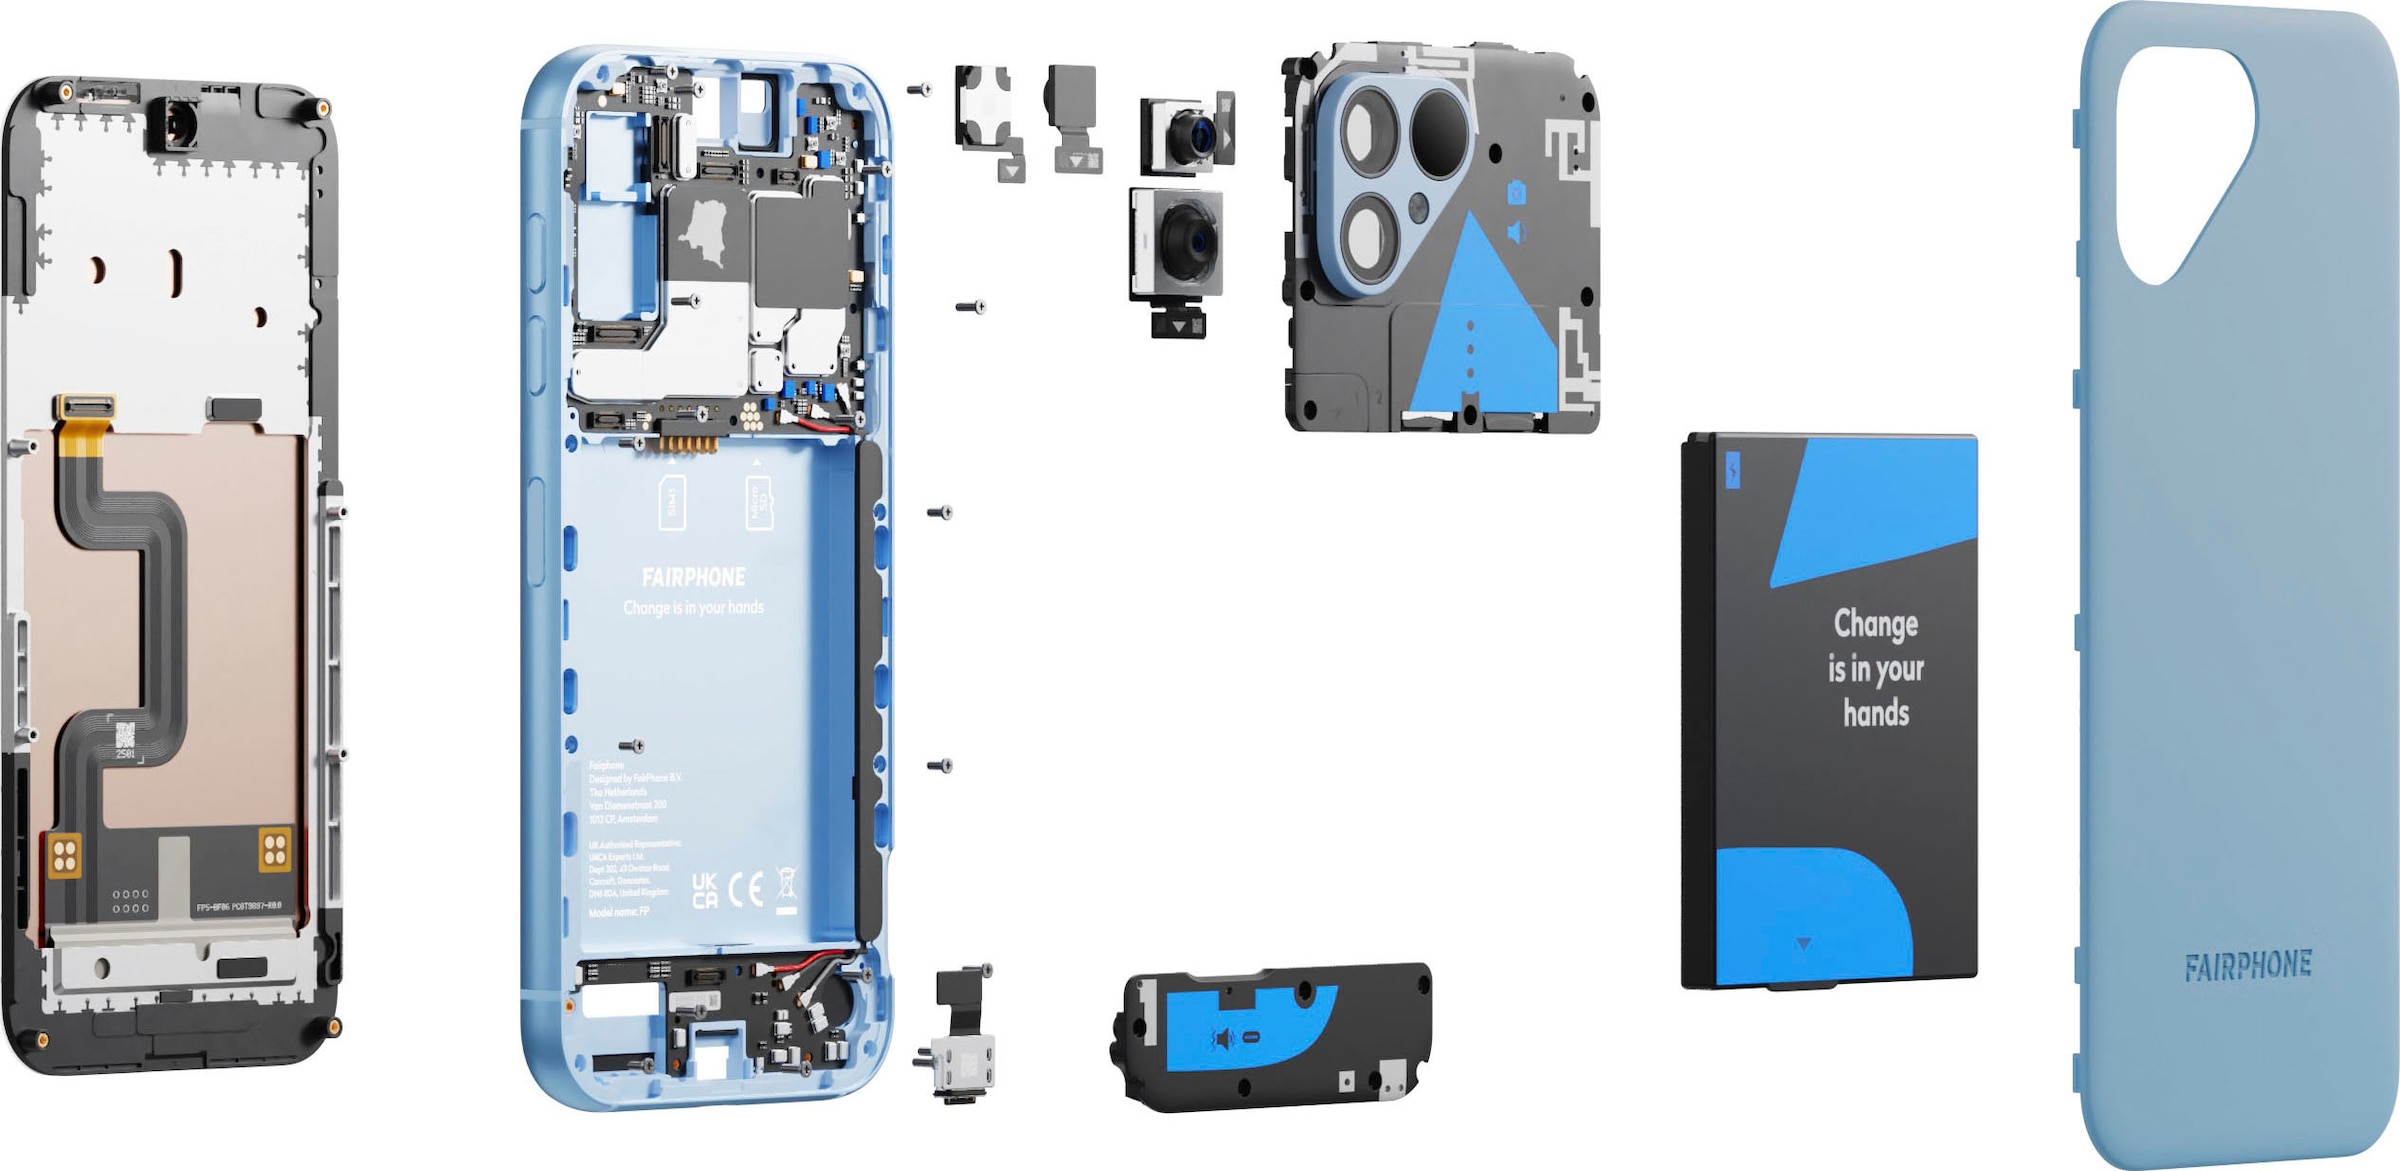 16,40 5«, »FAIRPHONE blue, 256 GB Fairphone bei Smartphone sky jetzt MP 50 cm/6,46 Speicherplatz, OTTO Zoll, Kamera